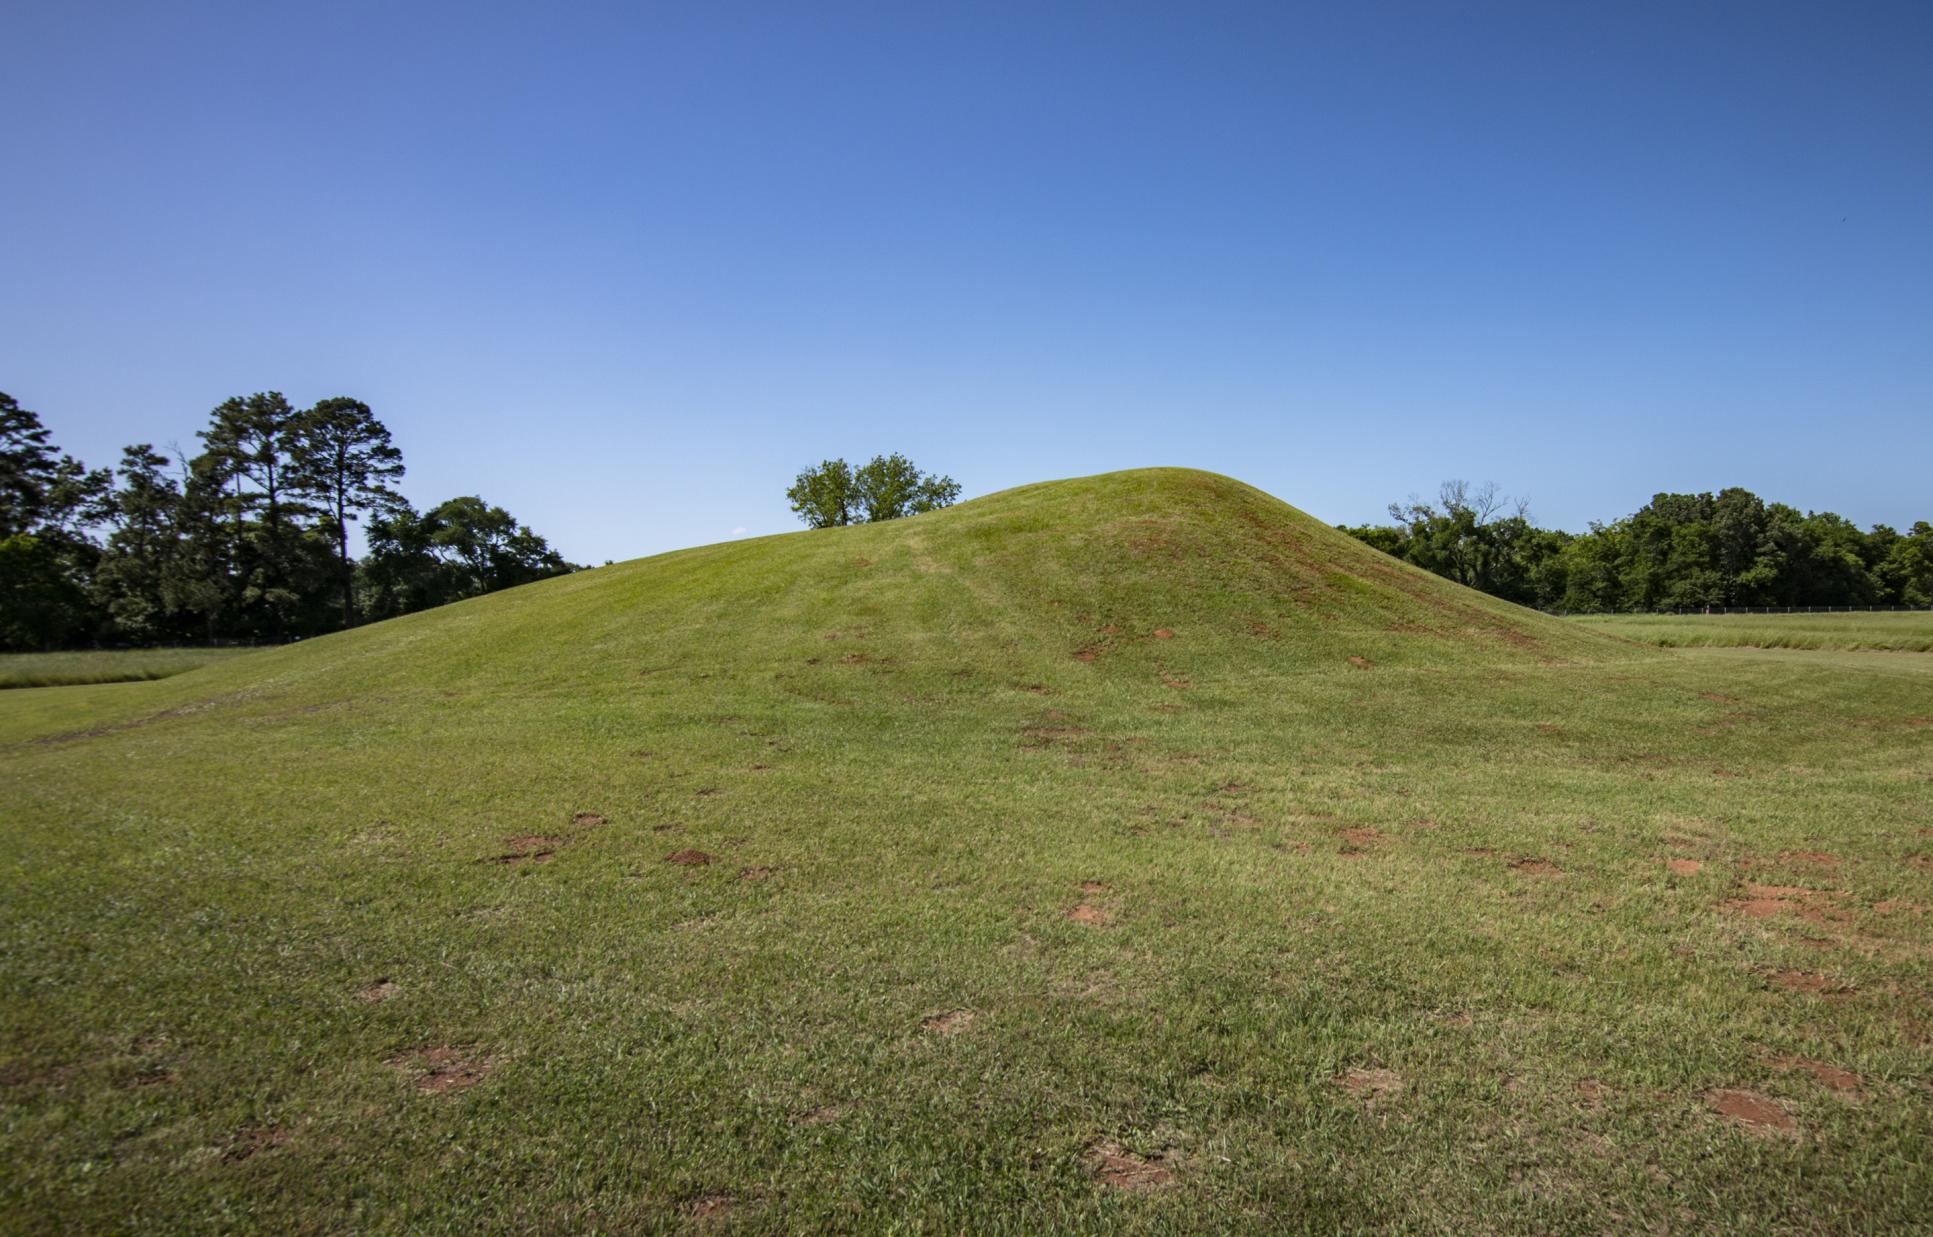 Caddo burial mound